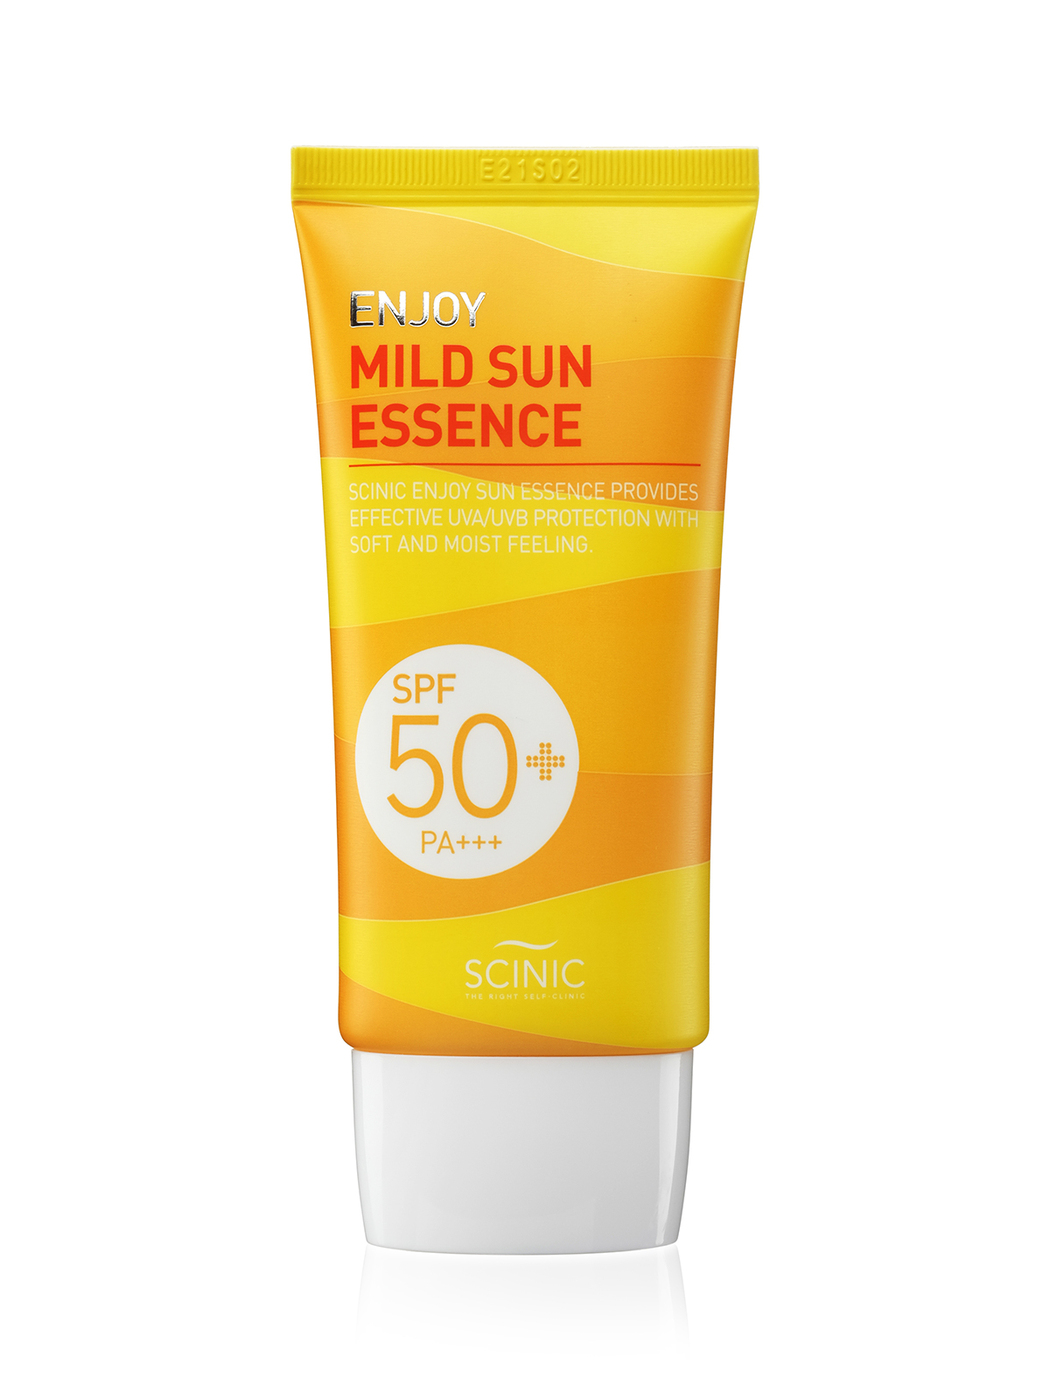 Essence 50 spf. Essence spf50+. Scinic enjoy mild Sun Essence ex spf50+ pa++++ солнцезащитная эссенция. Солнцезащитный крем для кожи лица и тела (SPF 50 pa+++) Scinic. Scinic enjoy perfect Daily Sun Cream.